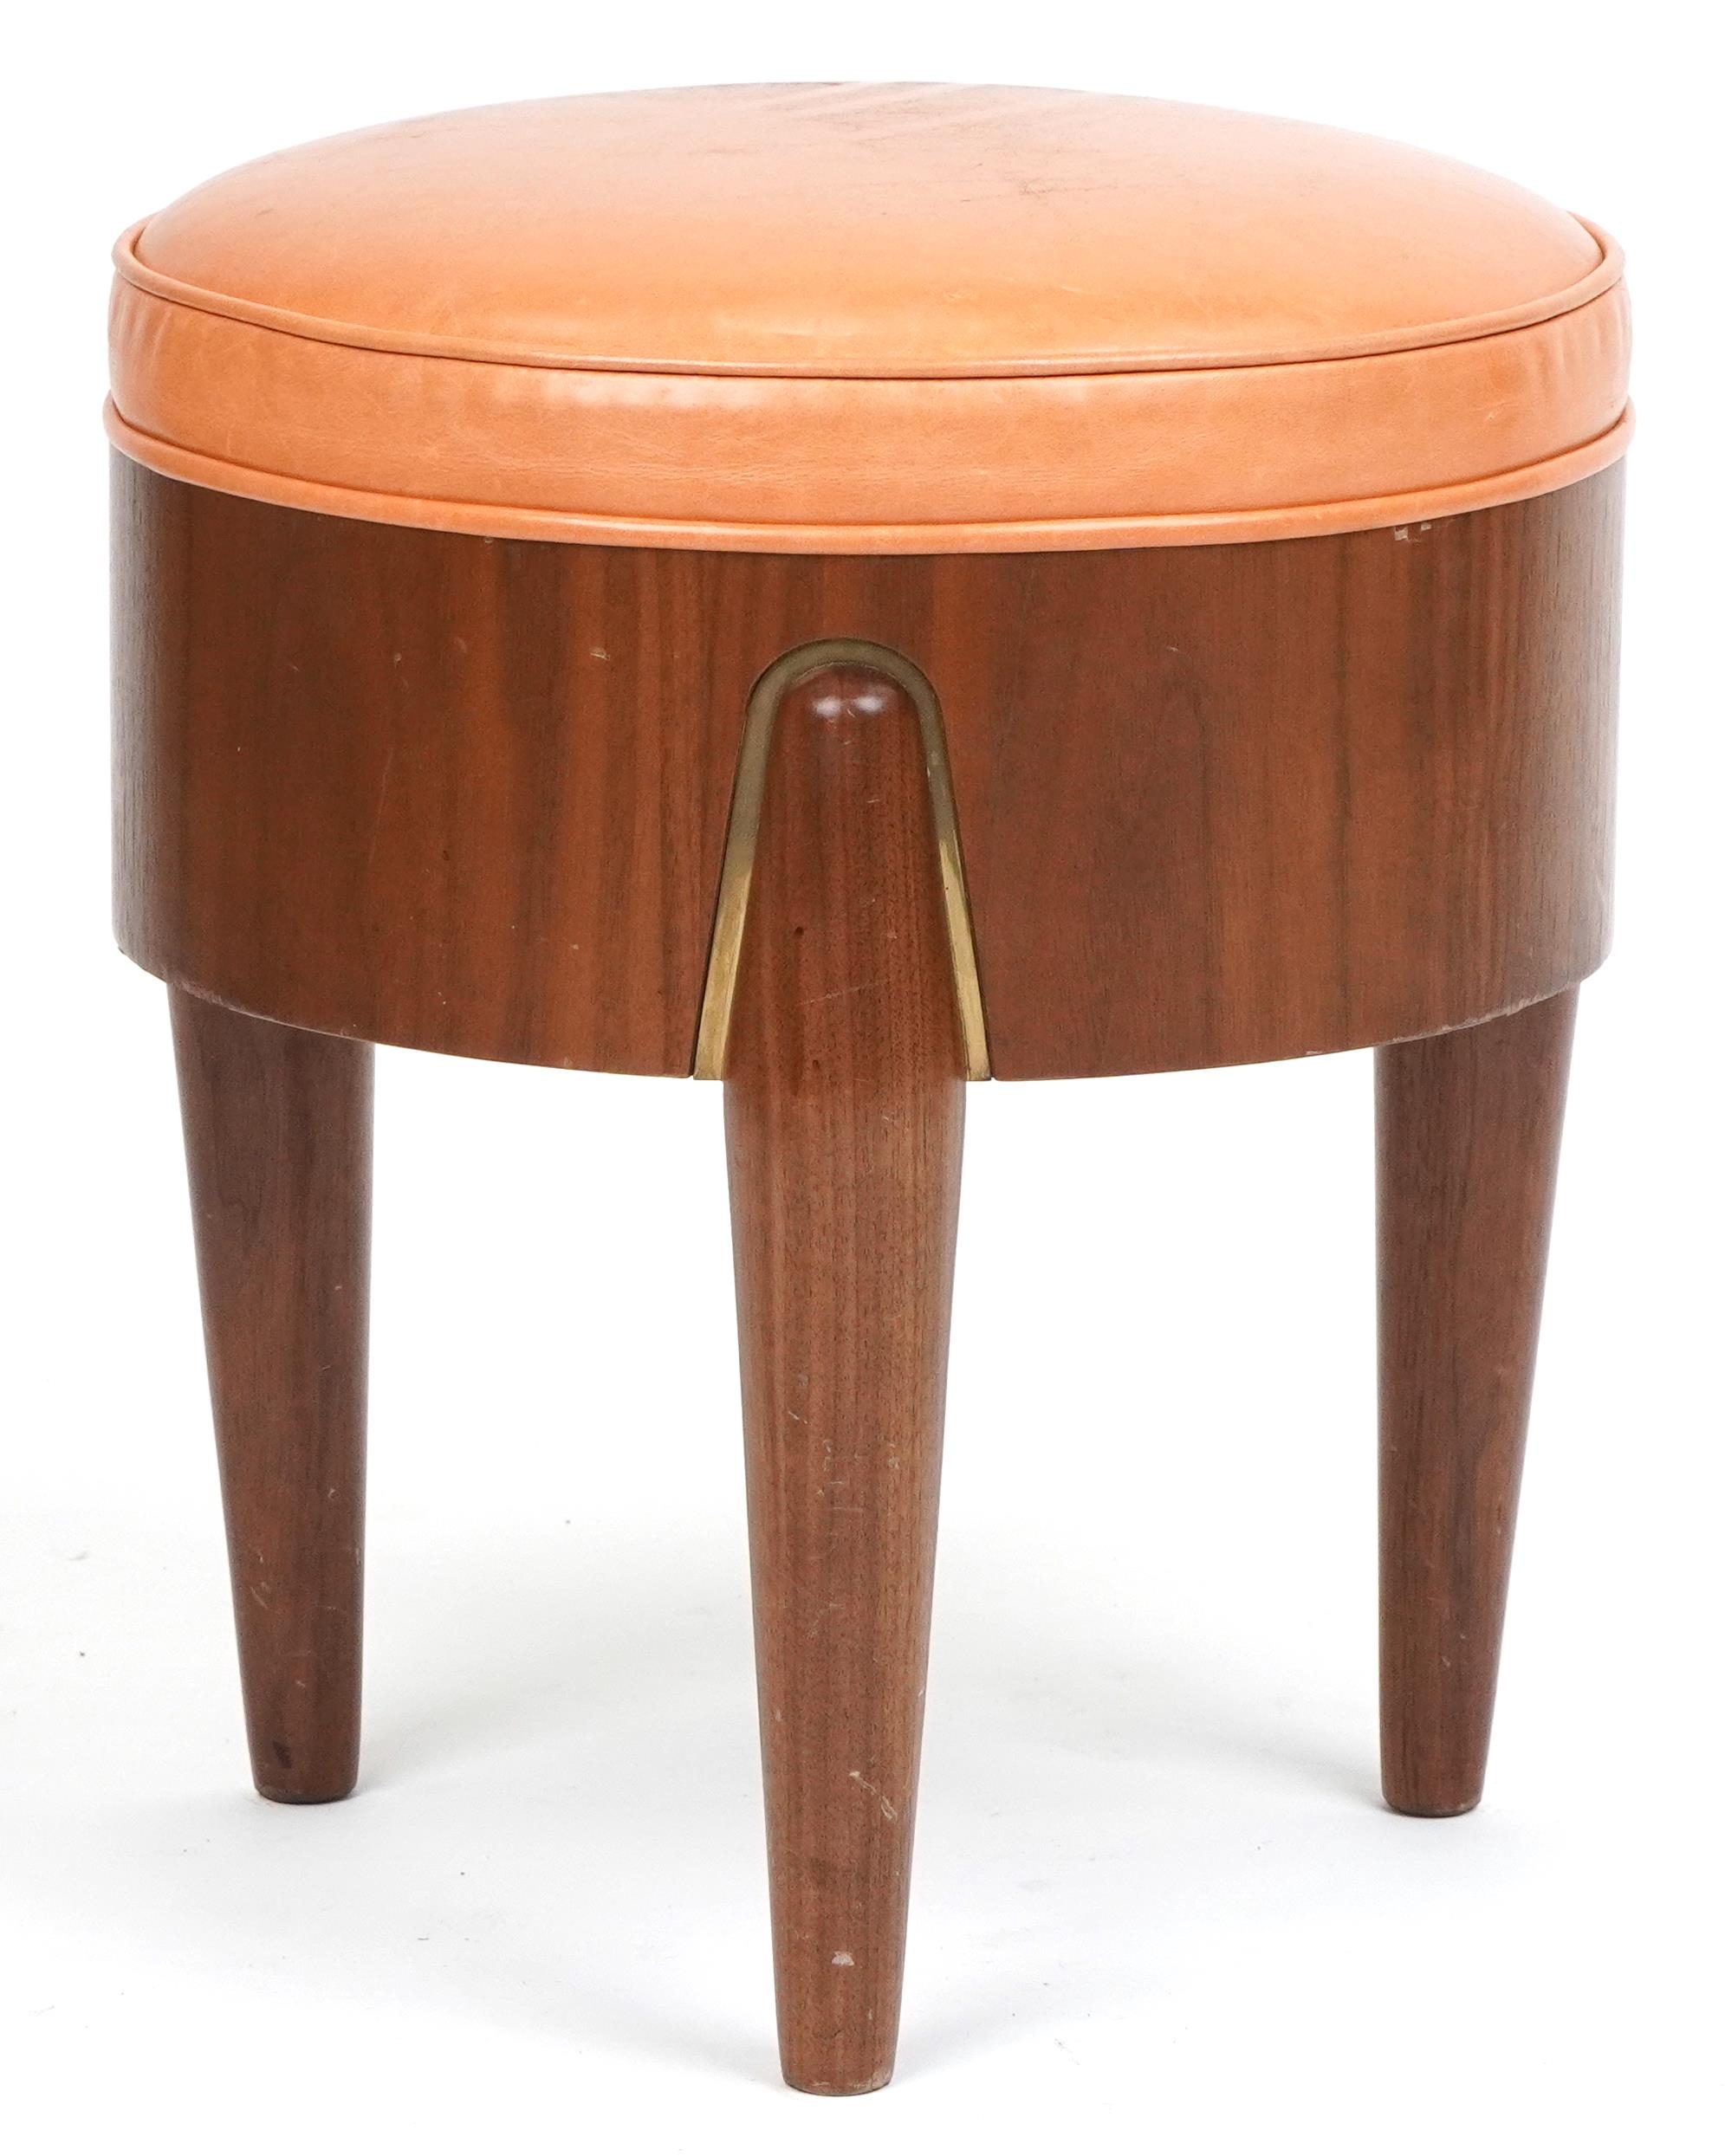 Scandinavian design hardwood three legged rocket stool with tan upholstered cushioned seat, 45cm H x